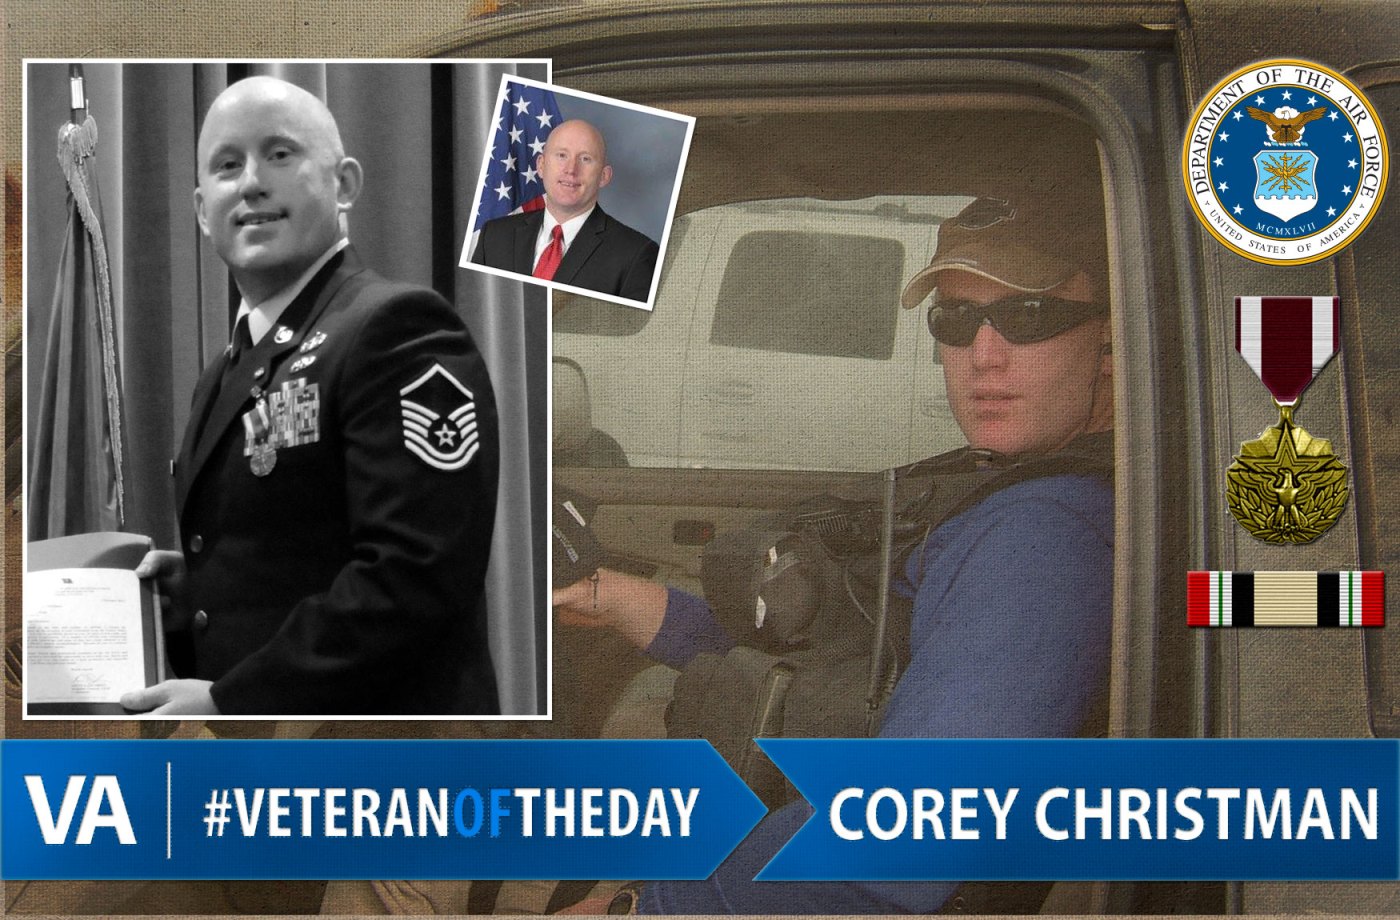 Veteran of the day Corey Christman